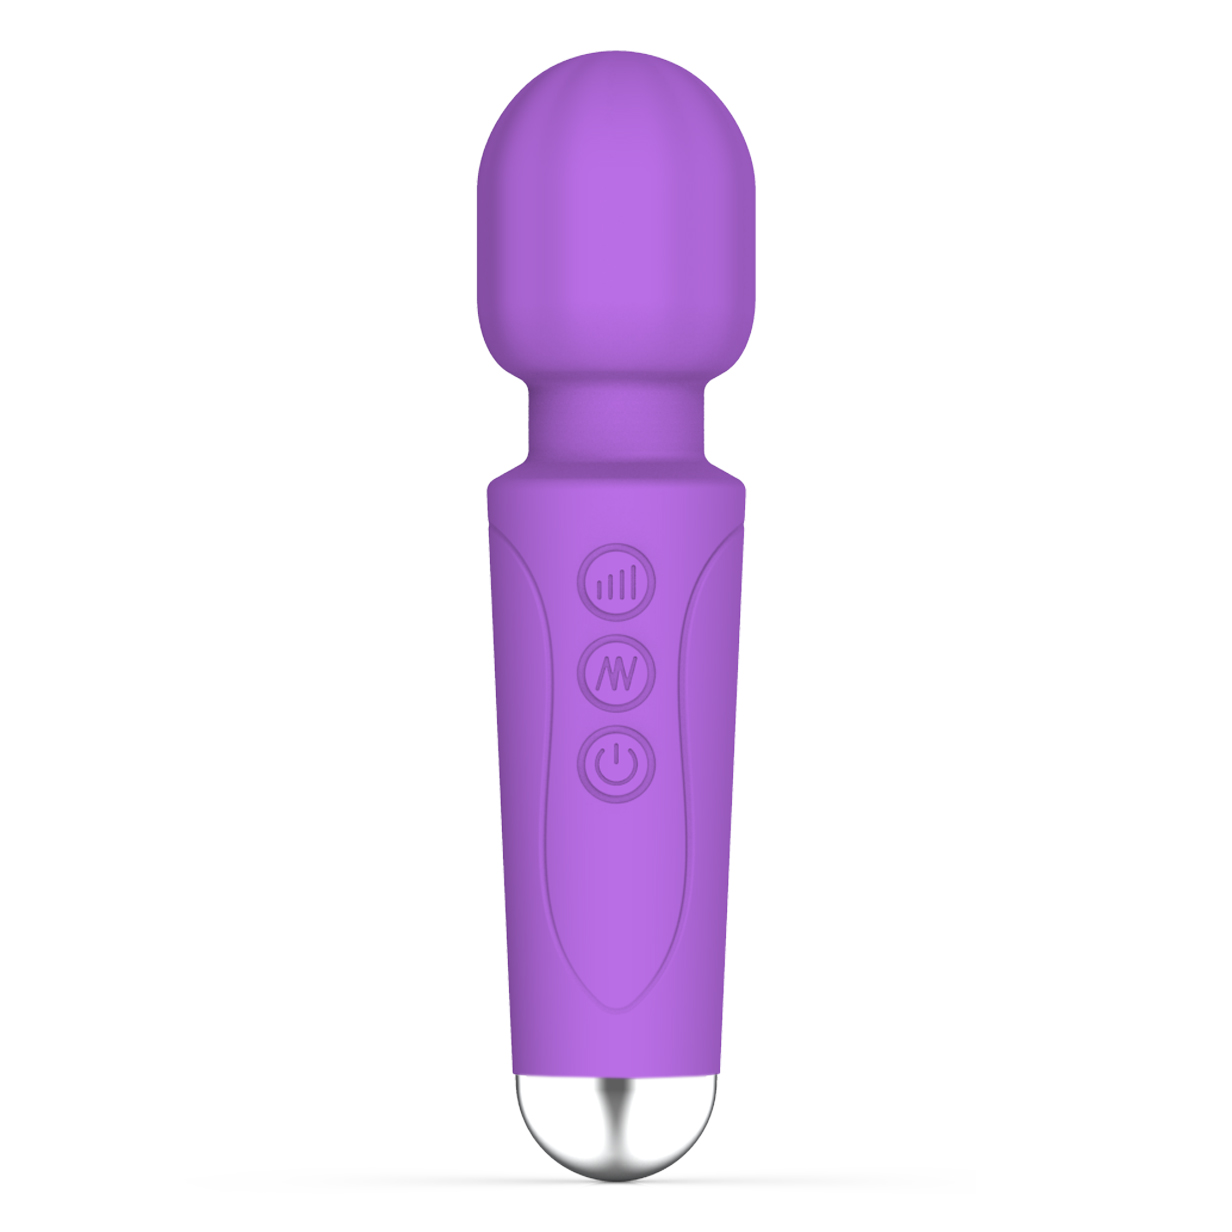 Hot Sale Vibration Clitoris Stimulator G Spot Vibrator Remote Realistic Dildo And Vibrator Sex Toy For Women